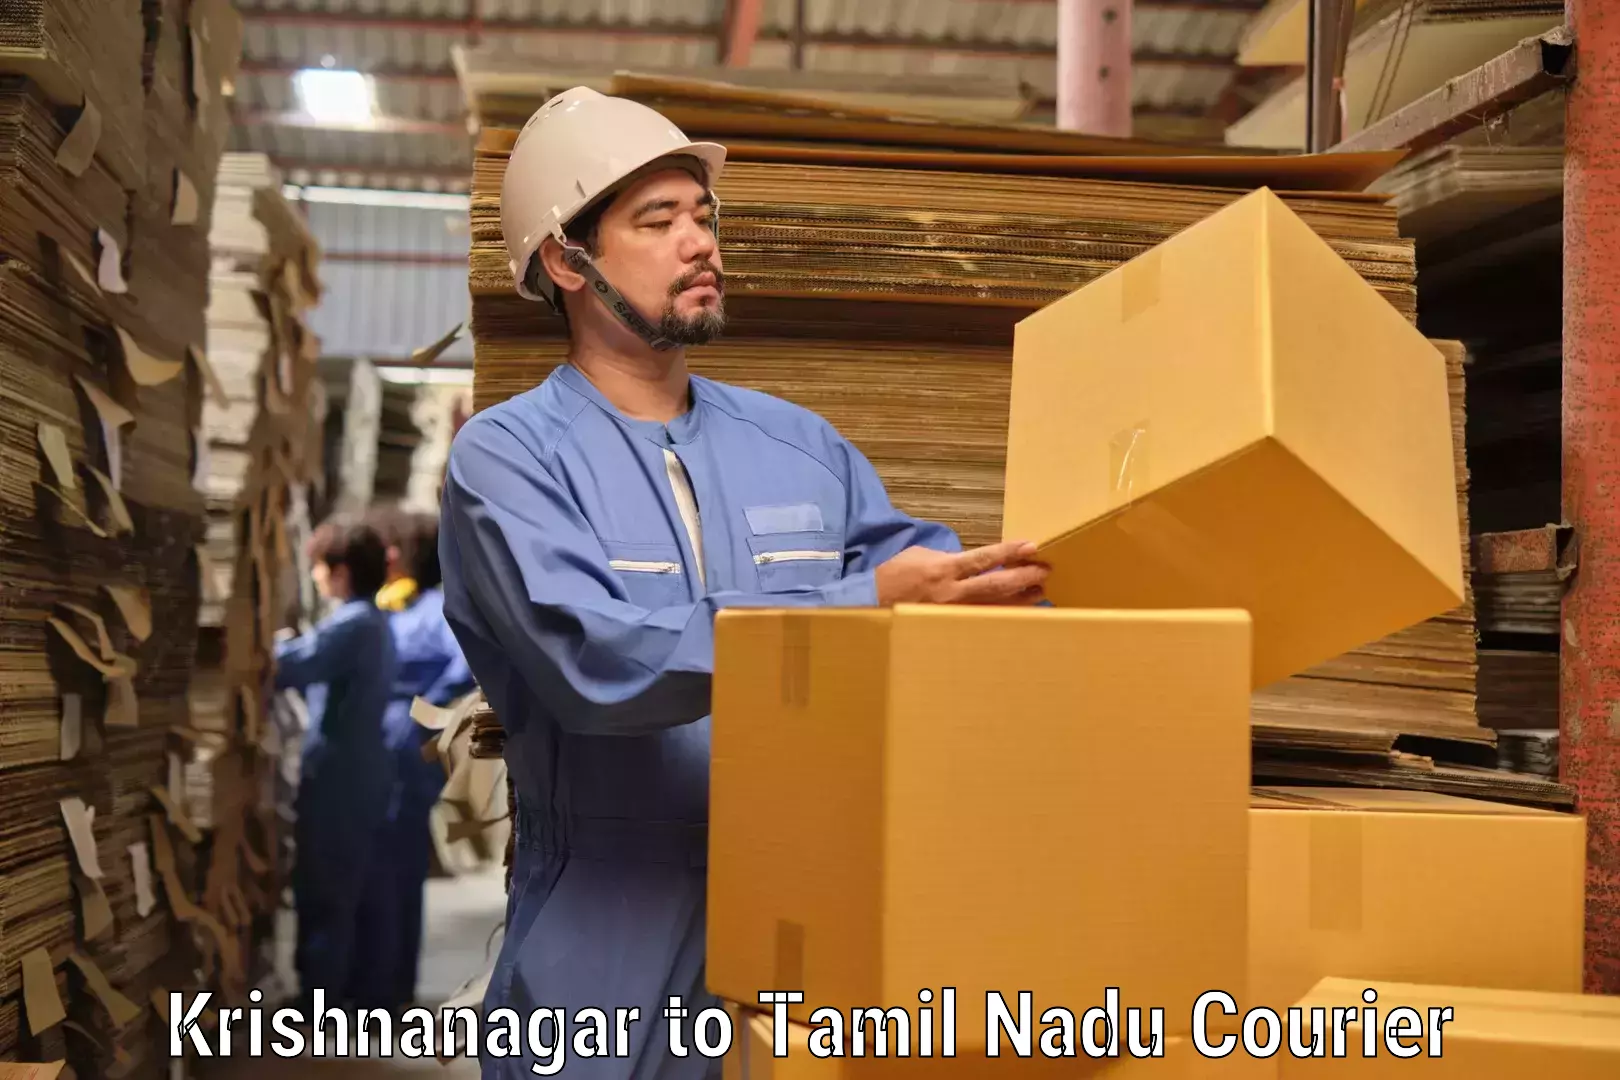 Reliable courier service in Krishnanagar to Vilathikulam